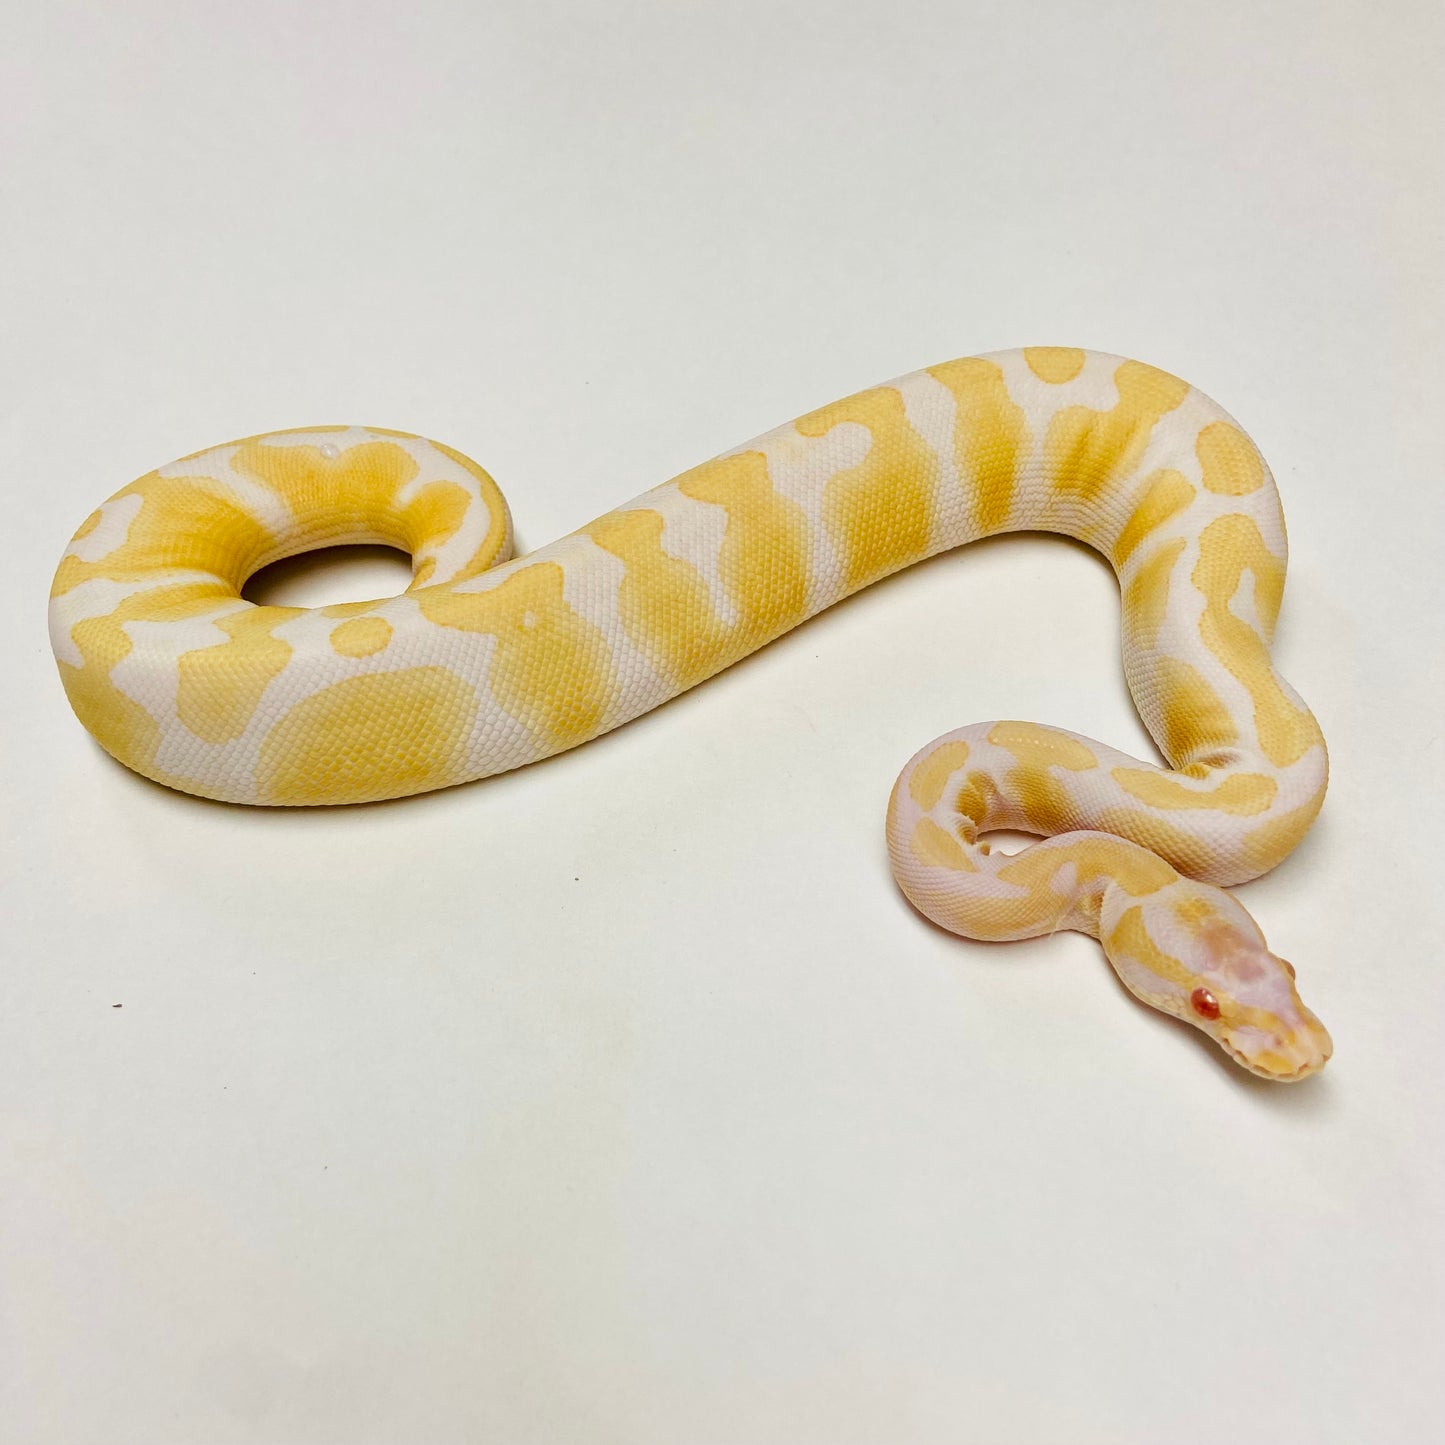 Albino Het Pied Ball Python- Female #2023F01